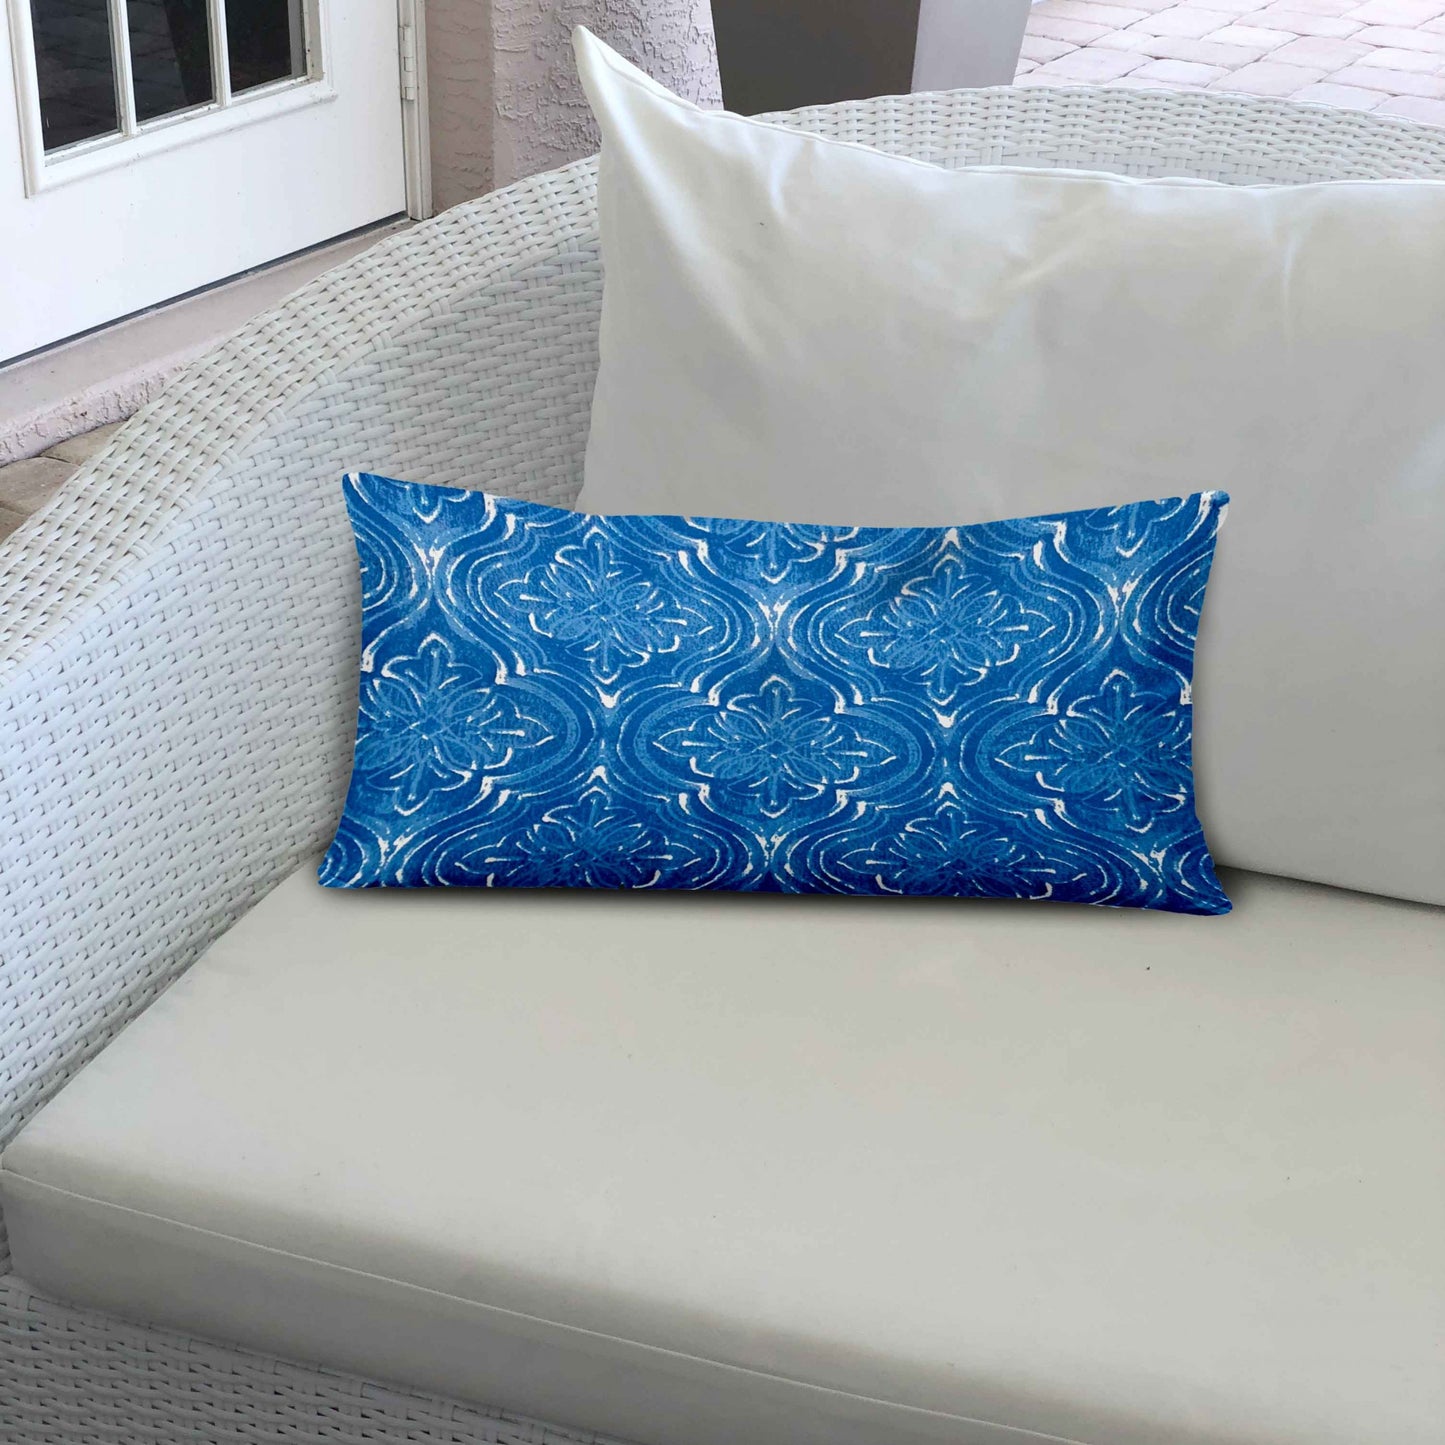 14" X 20" Blue And White Blown Seam Ikat Lumbar Indoor Outdoor Pillow